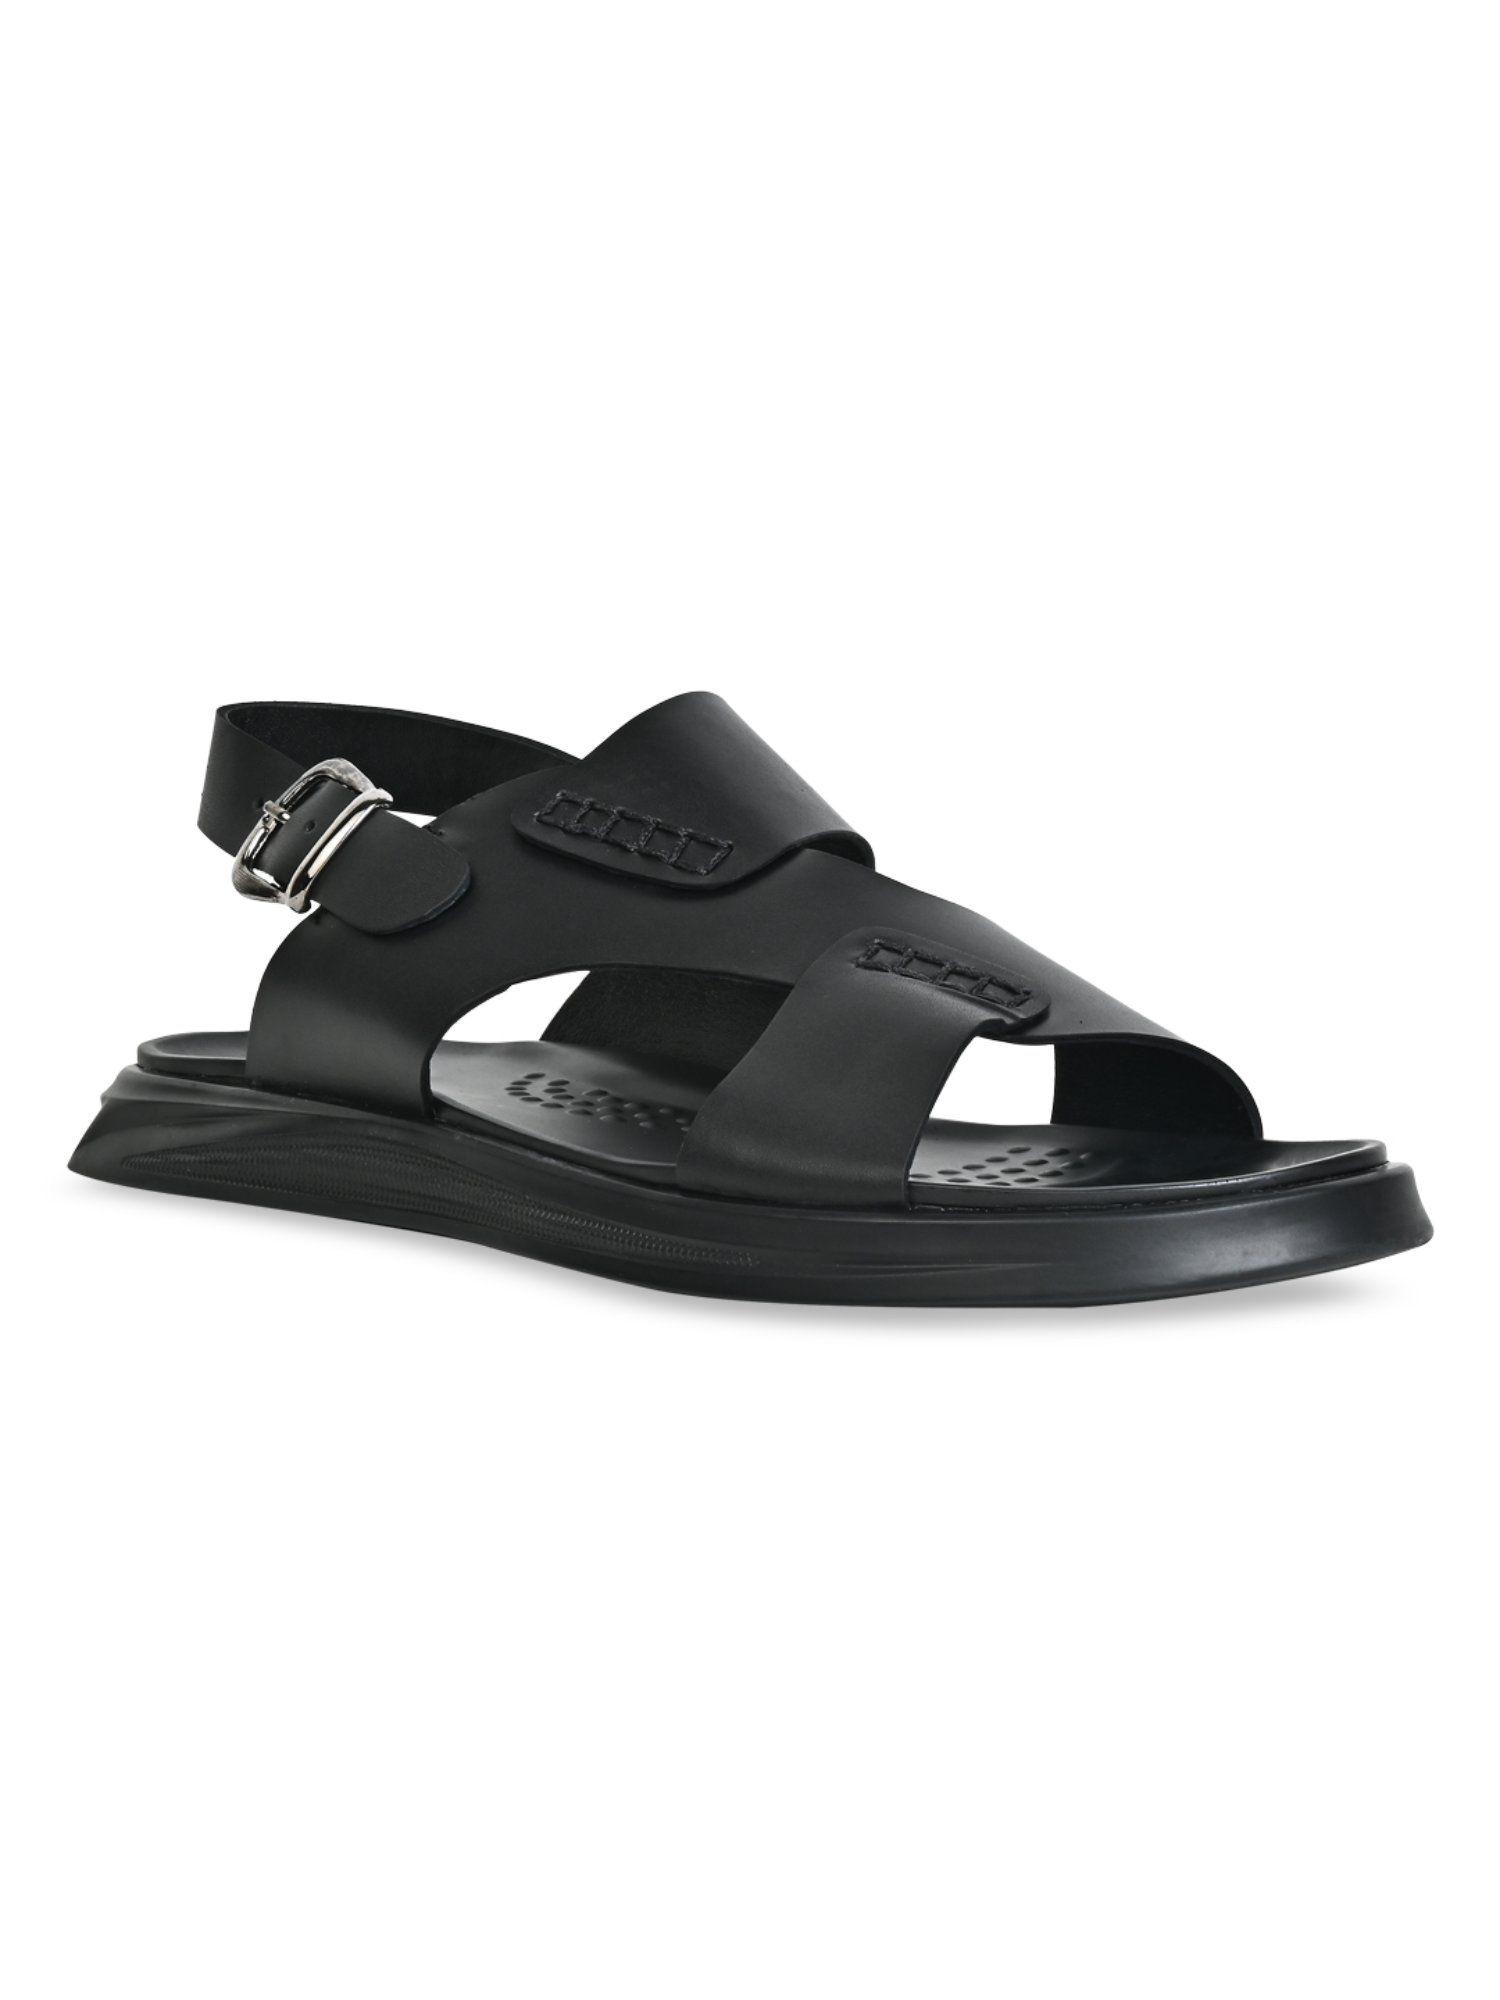 black-men-casual-leather-back-strap-sandals